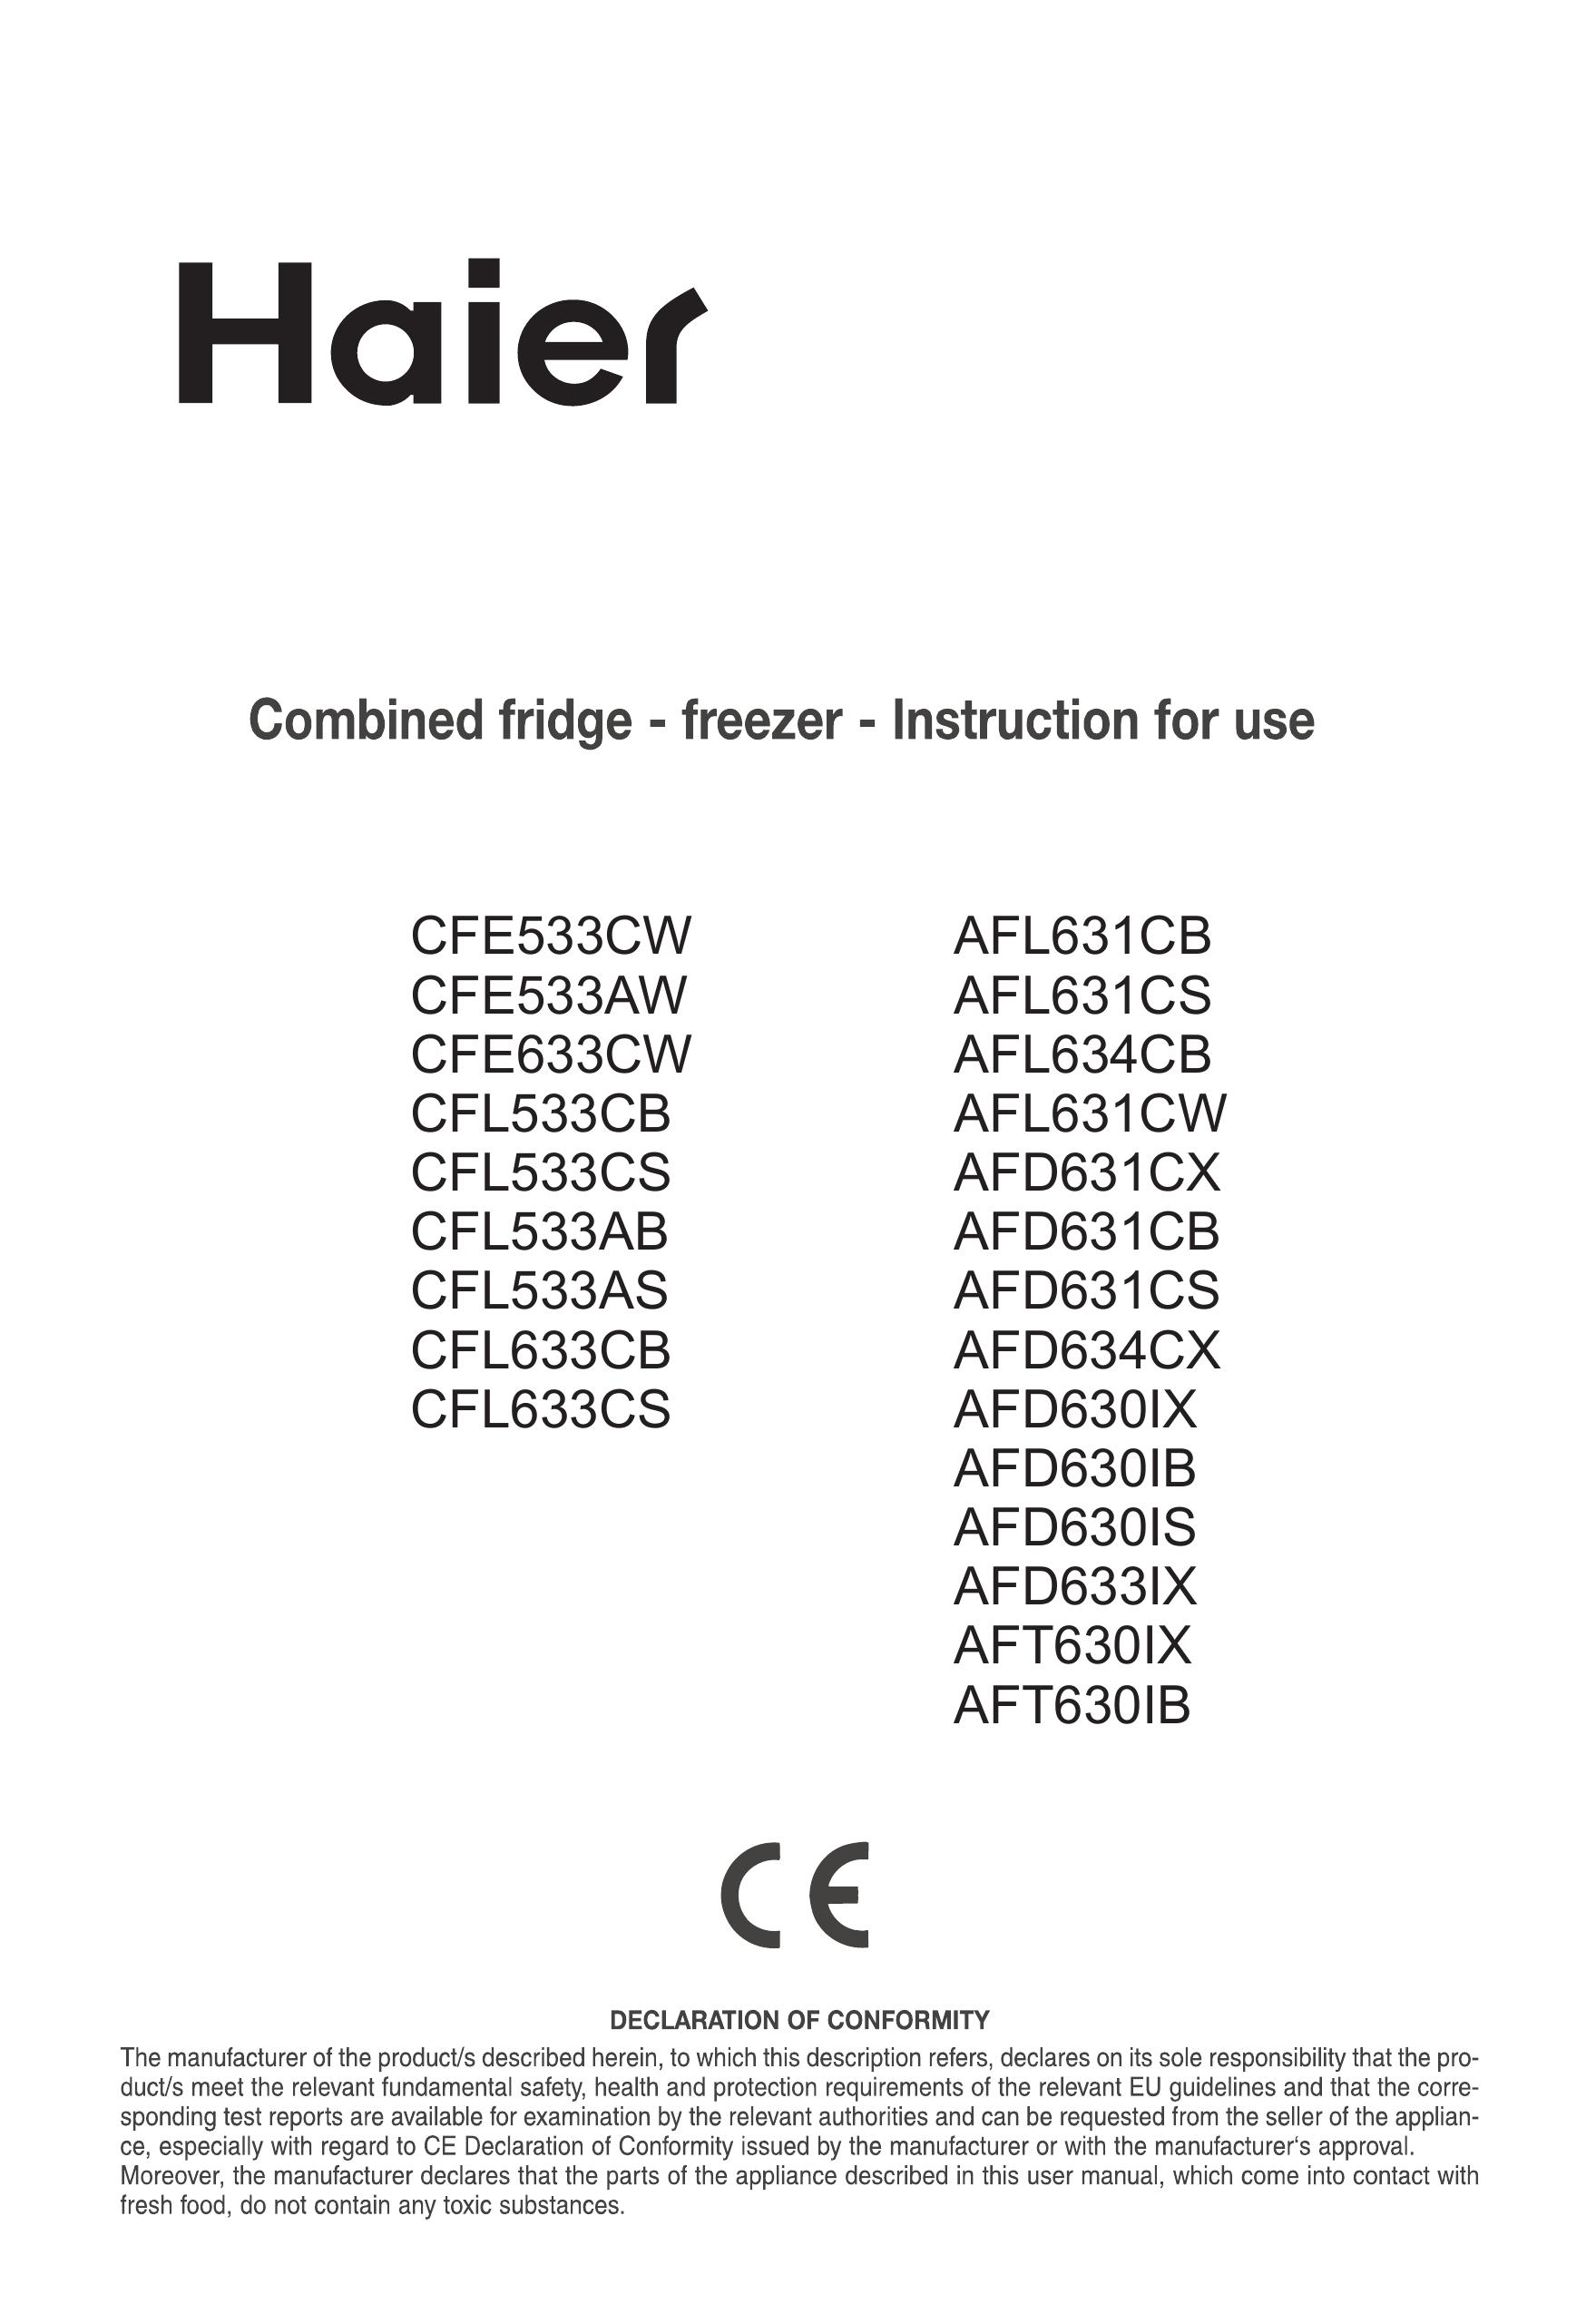 Haier AFD634CX Refrigerator User Manual